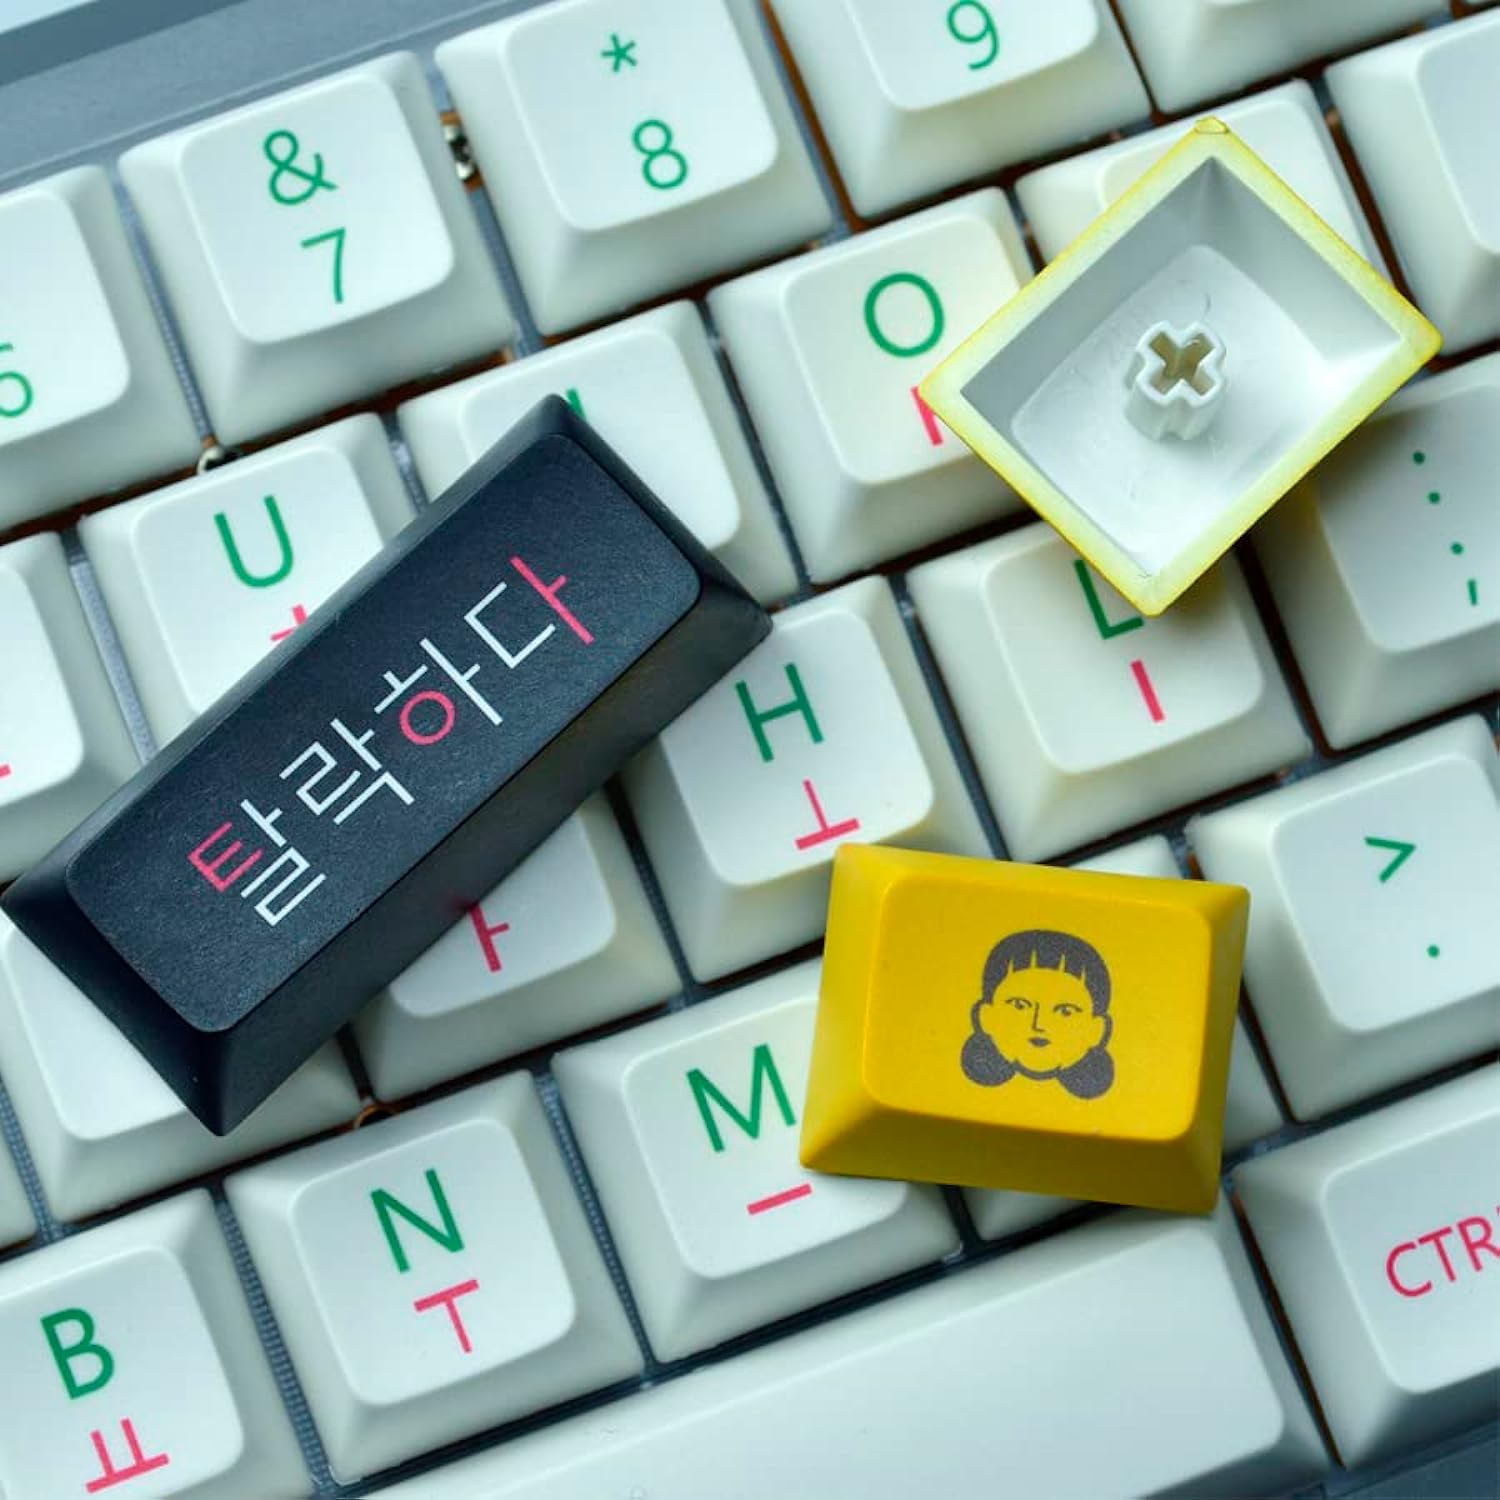 thinkstar Korean Keycaps,Pbt Xda Profile Keycap For Mx Switches Mechanical Keyboard&Optical Keyboard